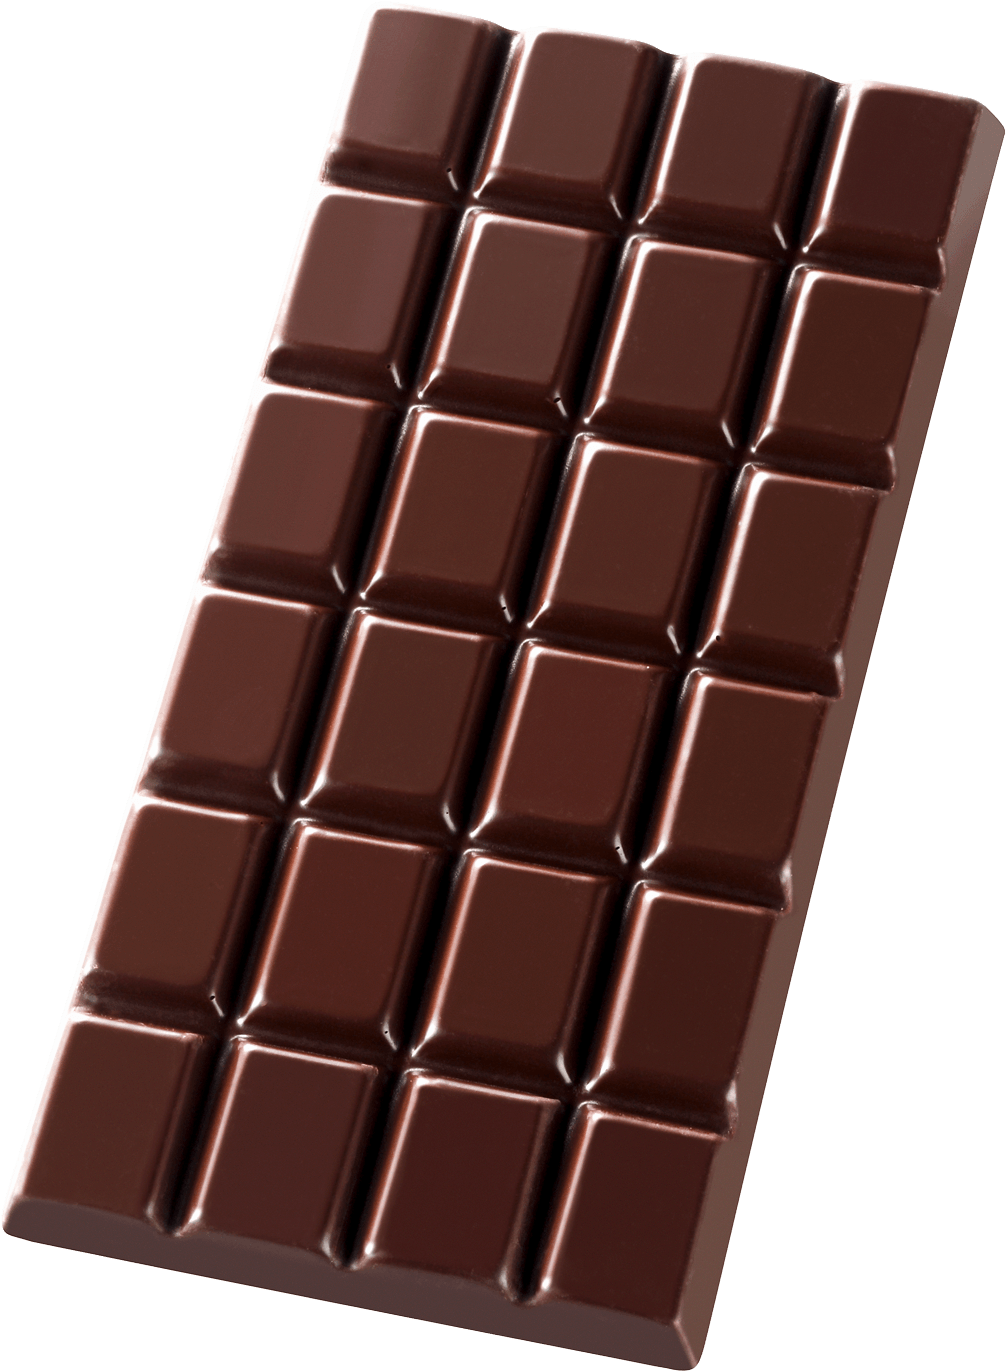 Chocolate Bar PNG Free File Download